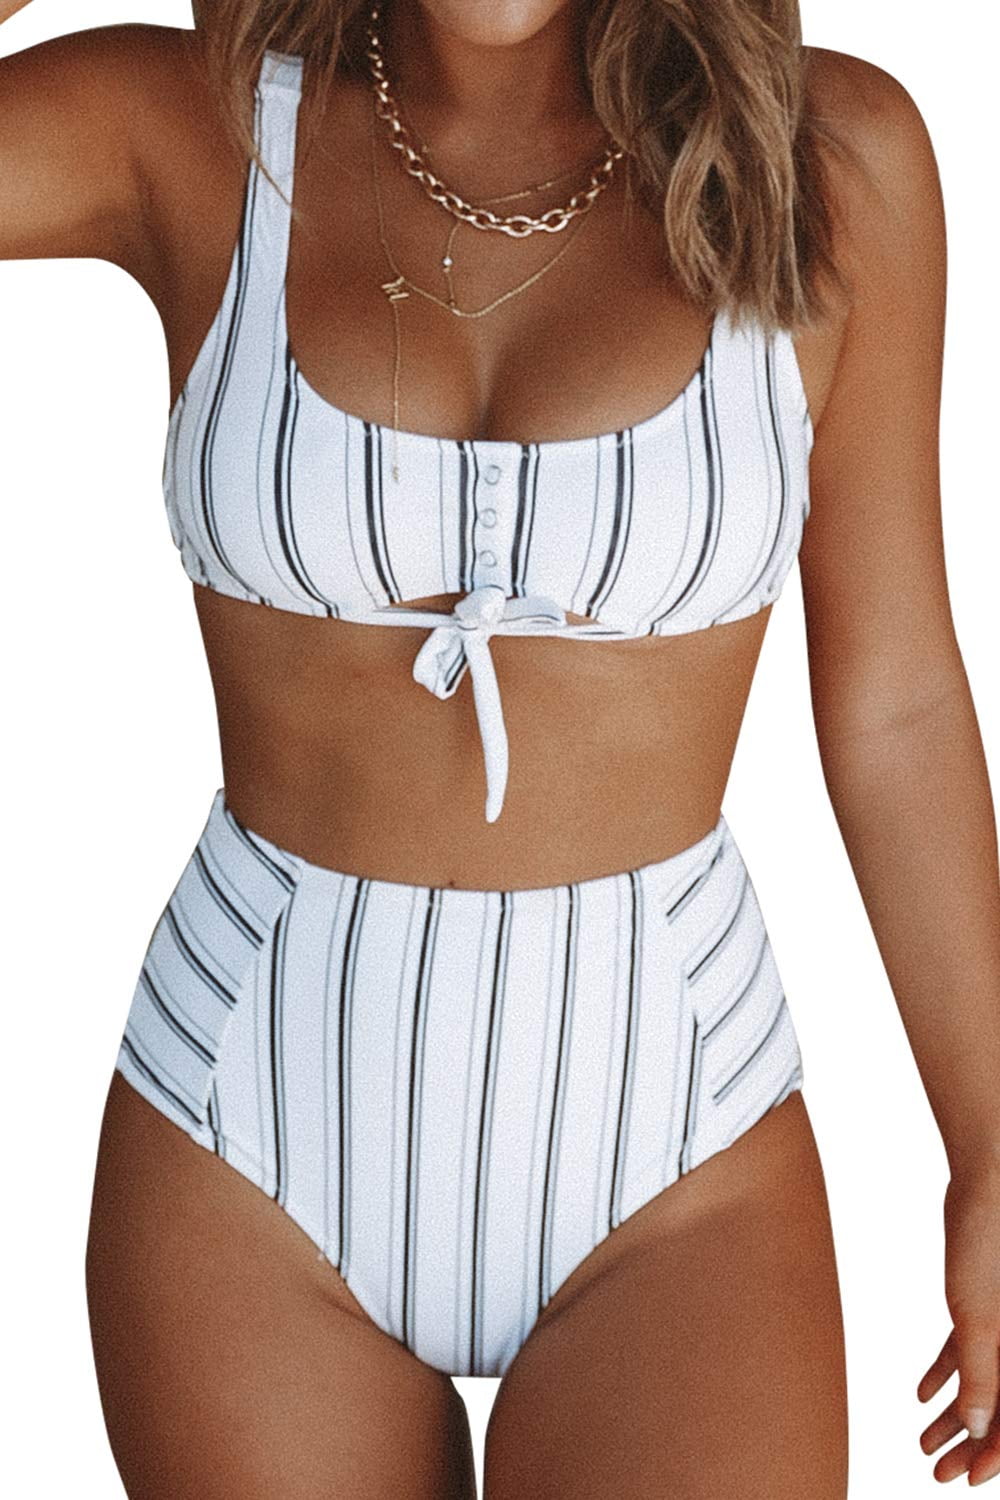 JFAN Women Two Pieces Stitching Striped Bikini Set Swimsuit Low Waist Swimwear